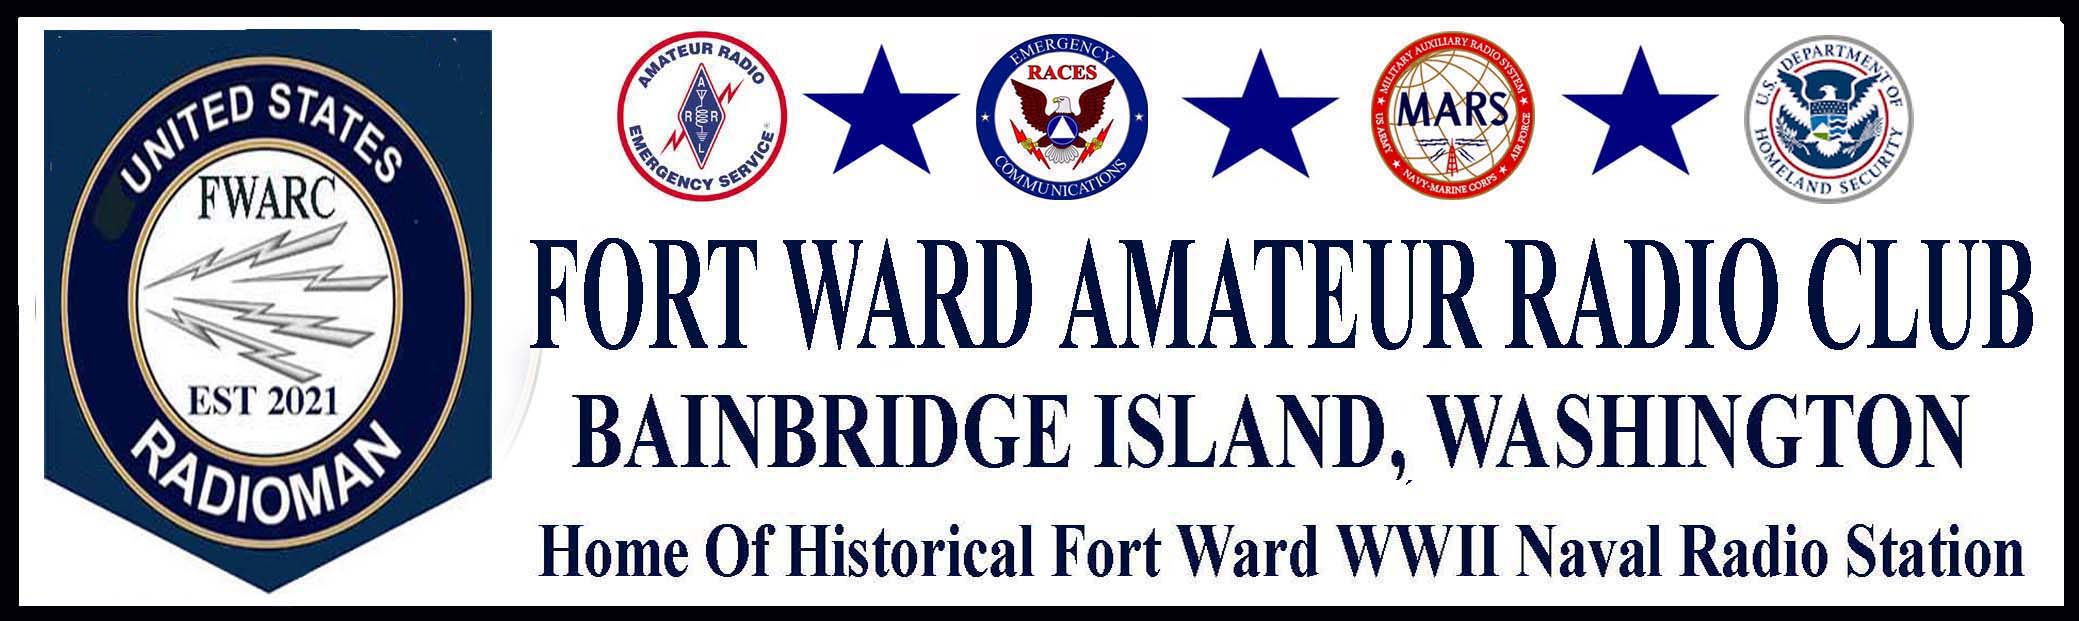 Bainbridge Island Fort Ward Amateur Radio Club